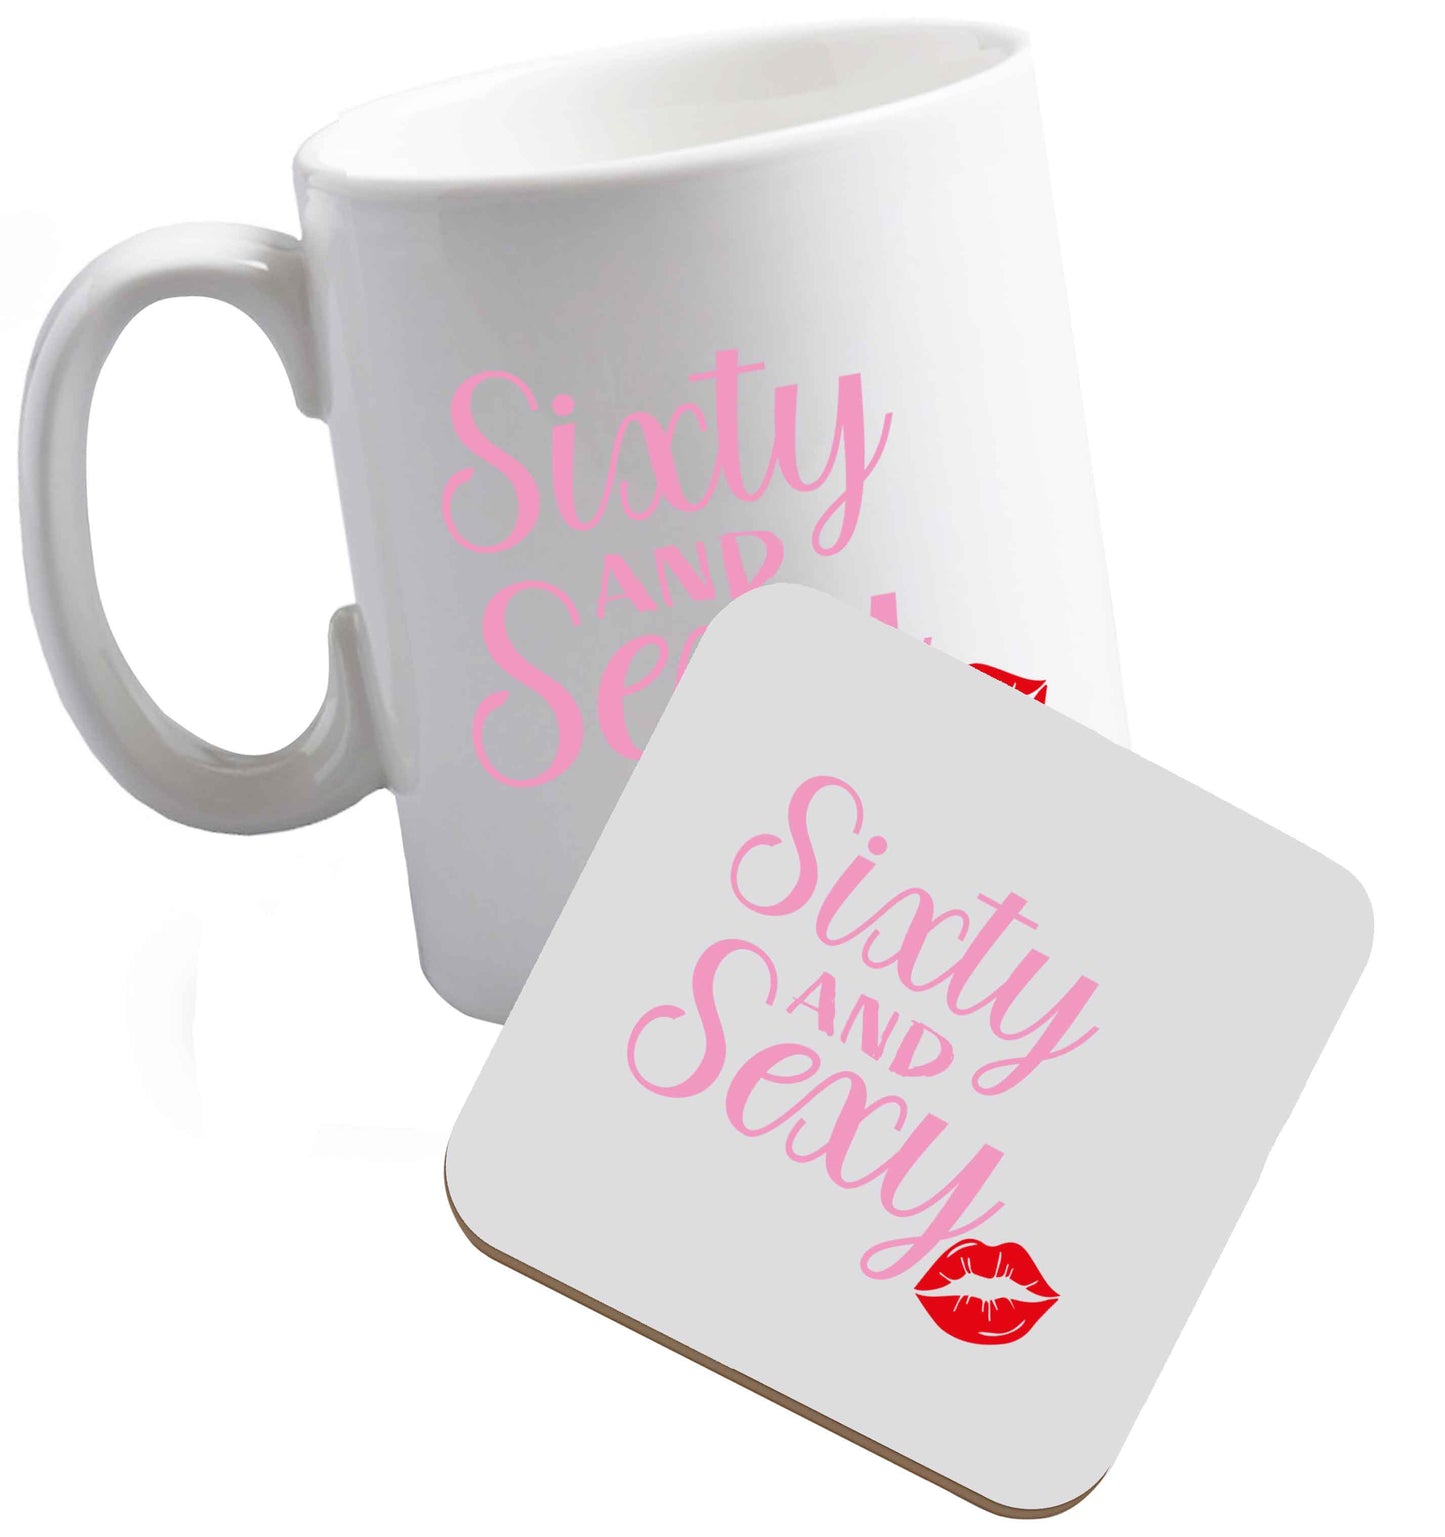 10 oz Sixty and sexy ceramic mug and coaster set right handed